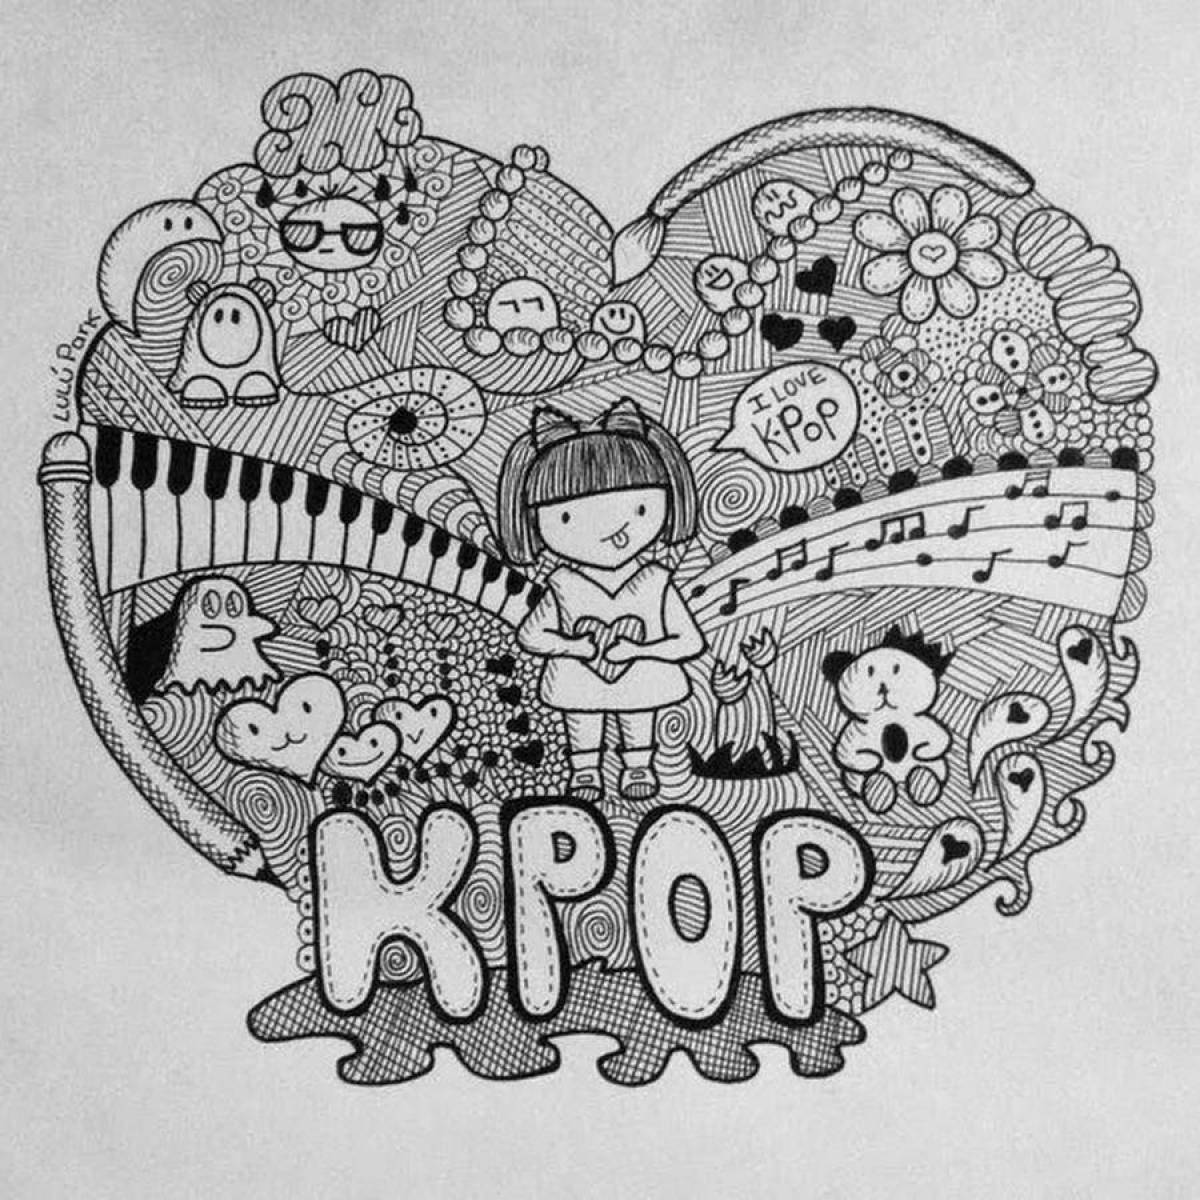 Bright k-pop coloring book